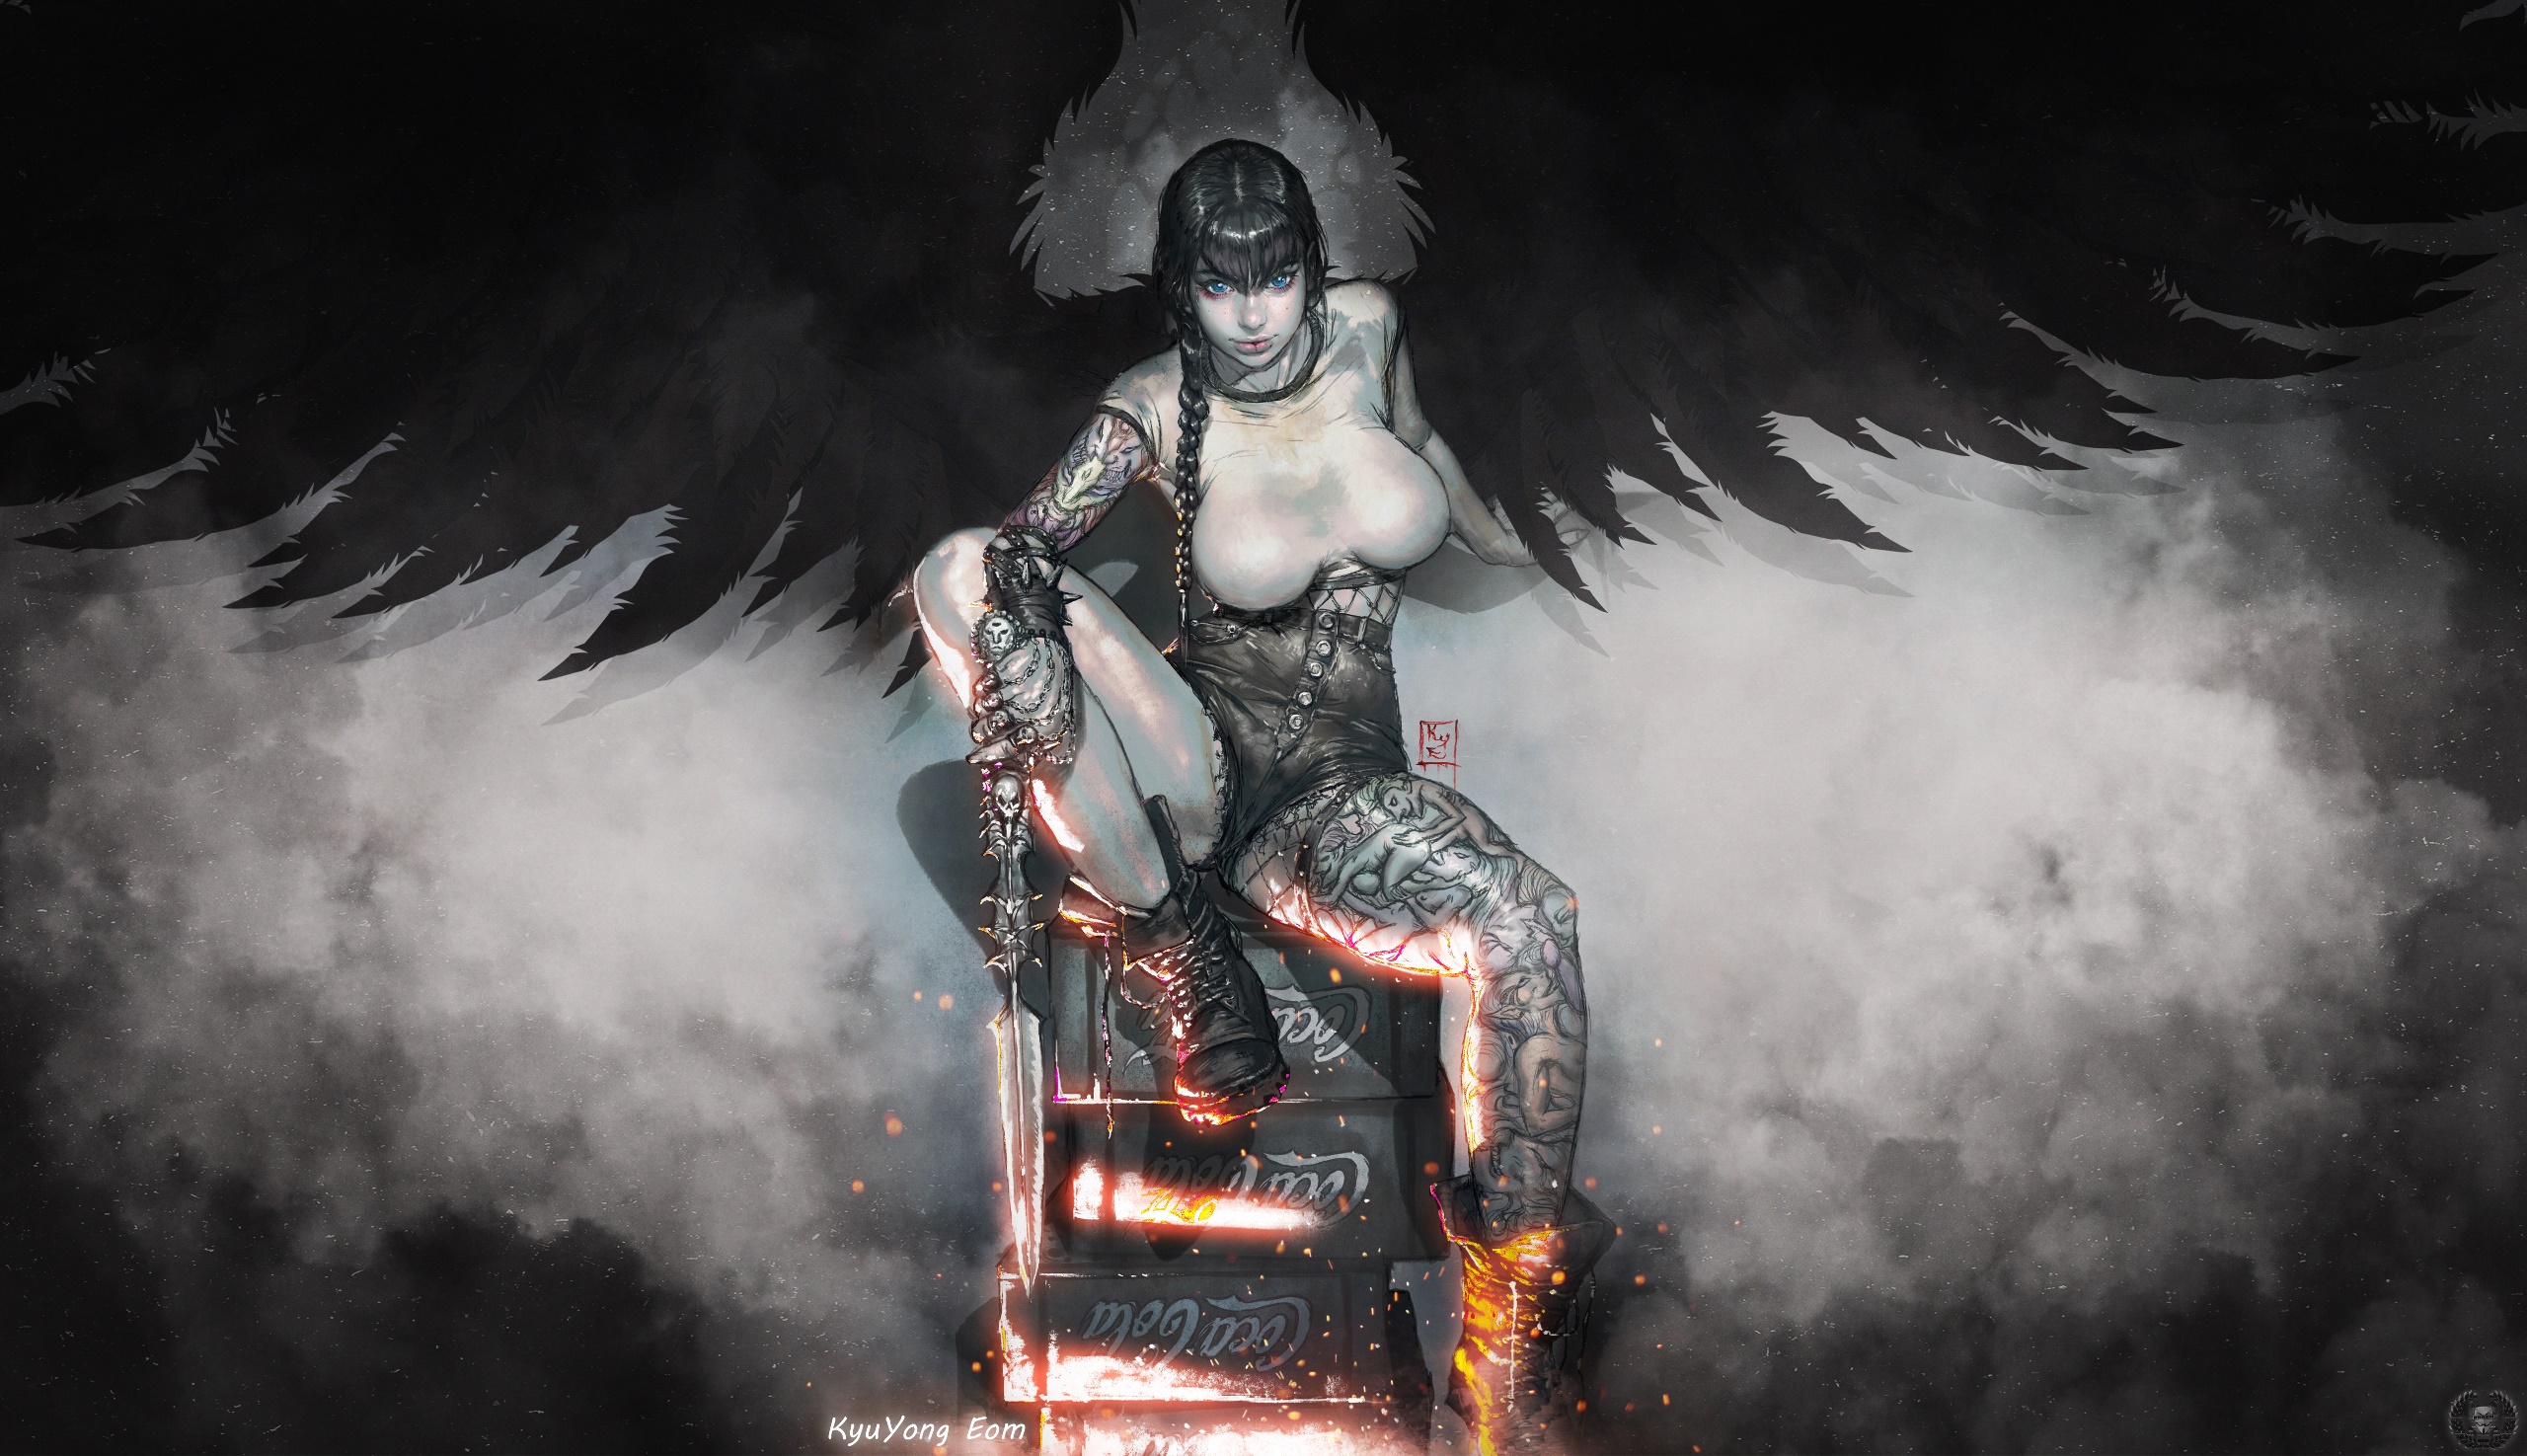 General 2560x1475 angel fantasy art fantasy girl big boobs illustration KyuYong Eom tattoo missing sock